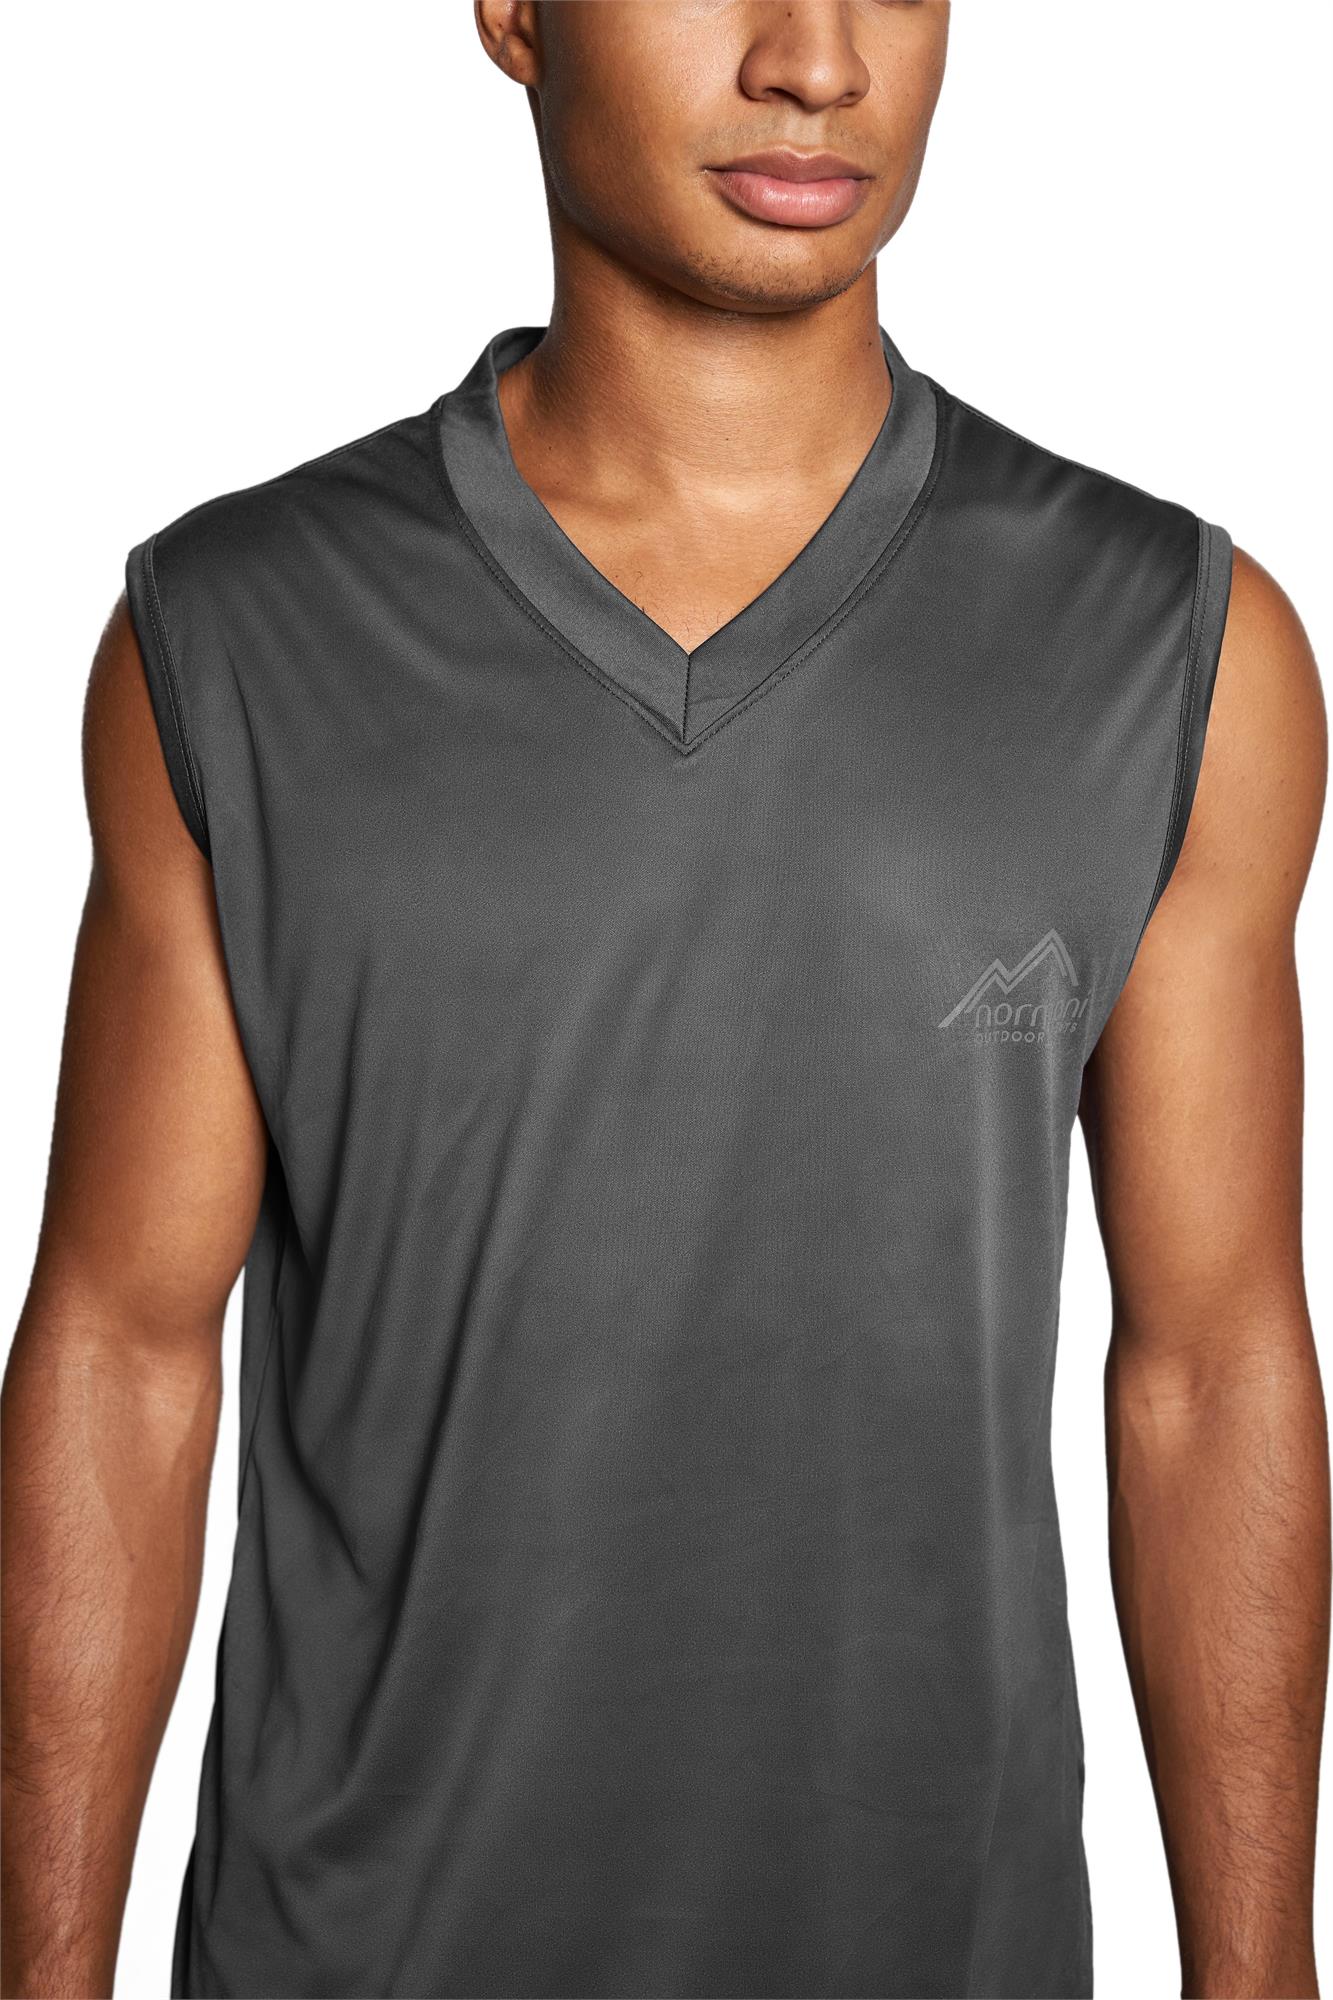 ✅SLAZENGER Herren Unterhemd Tank Top Muskel Shirt Sport Fitness Freizeit Grau